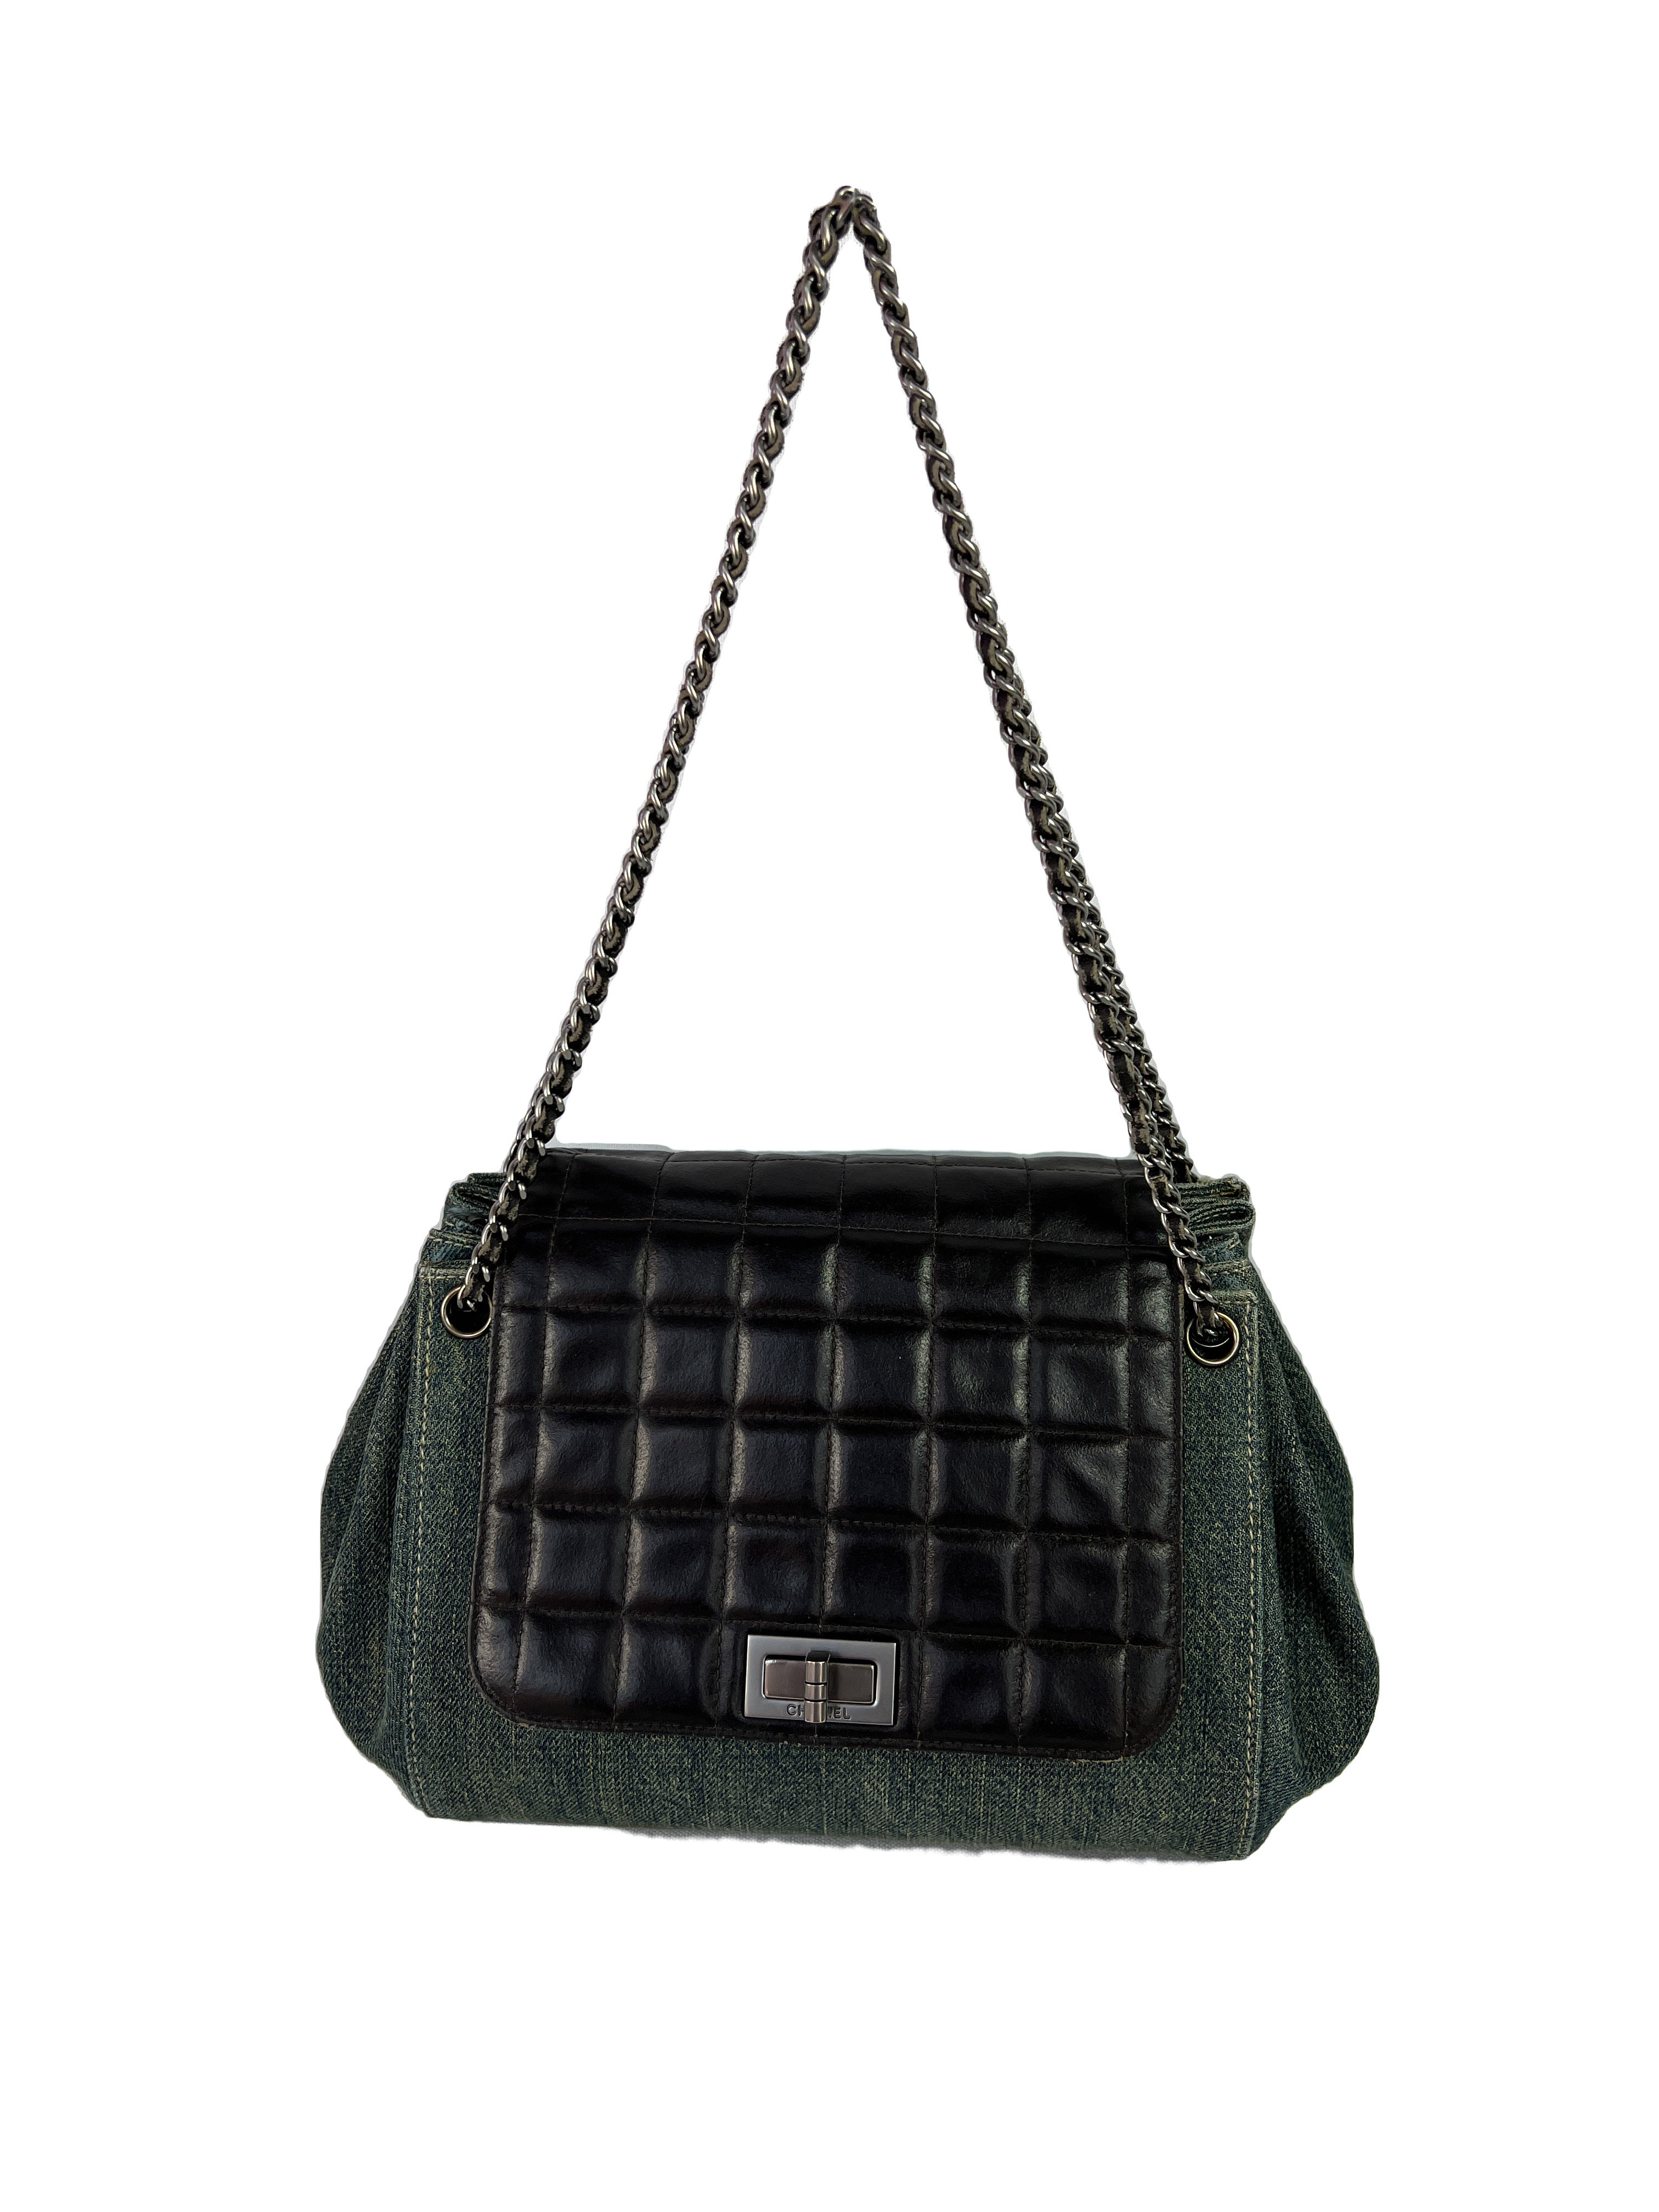 Chanel denim leather chocolate bar flap accordion shoulder bag